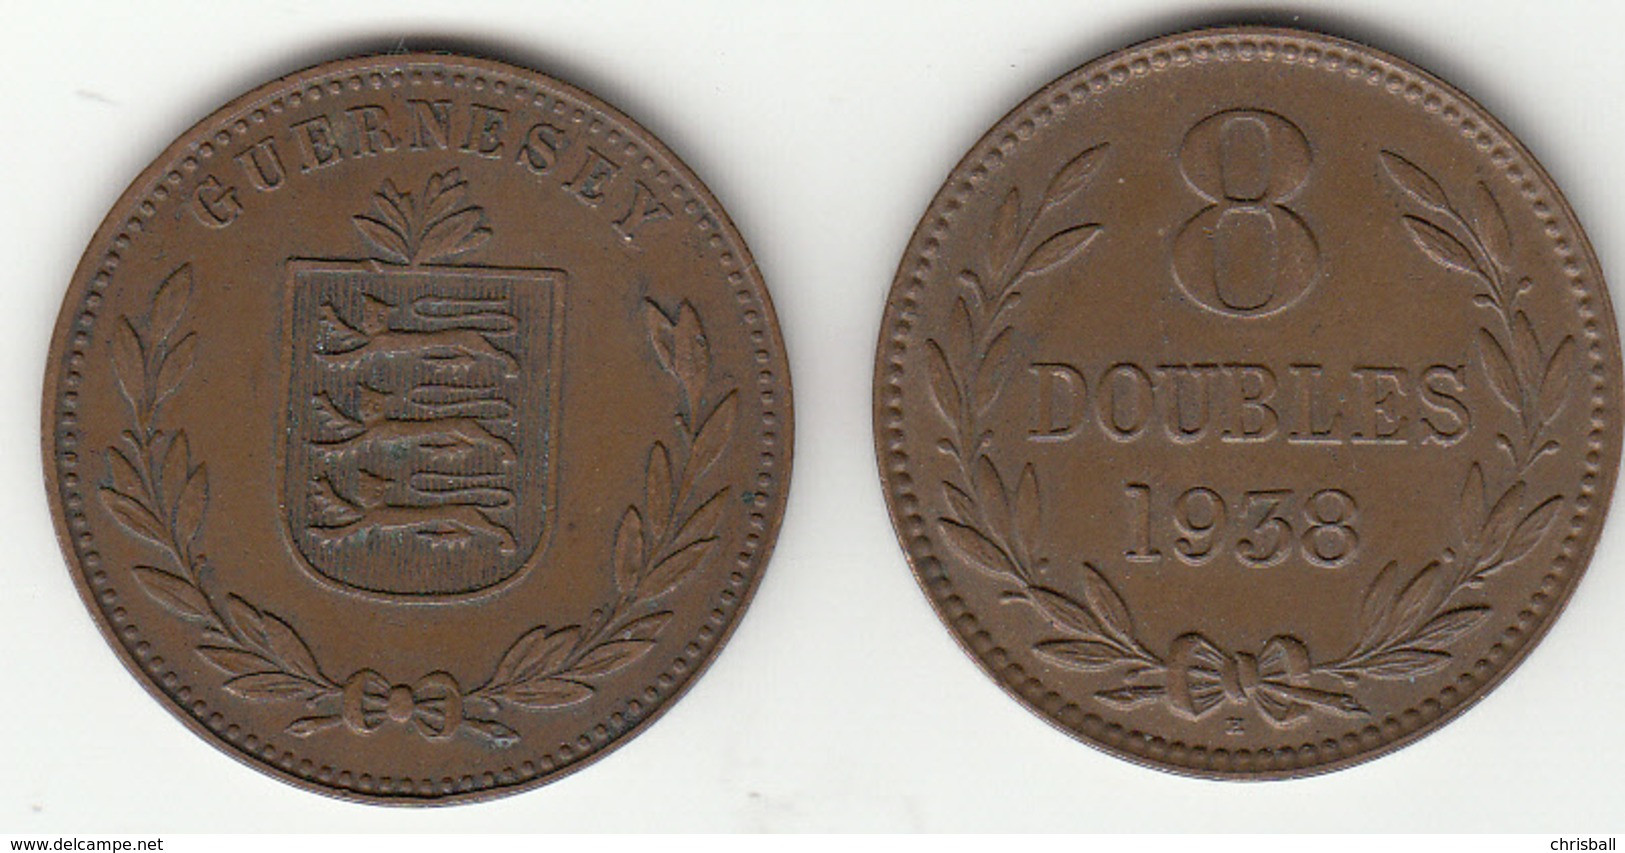 Guernsey Coin 8doubles 1938 Condition Very Fine - Guernsey